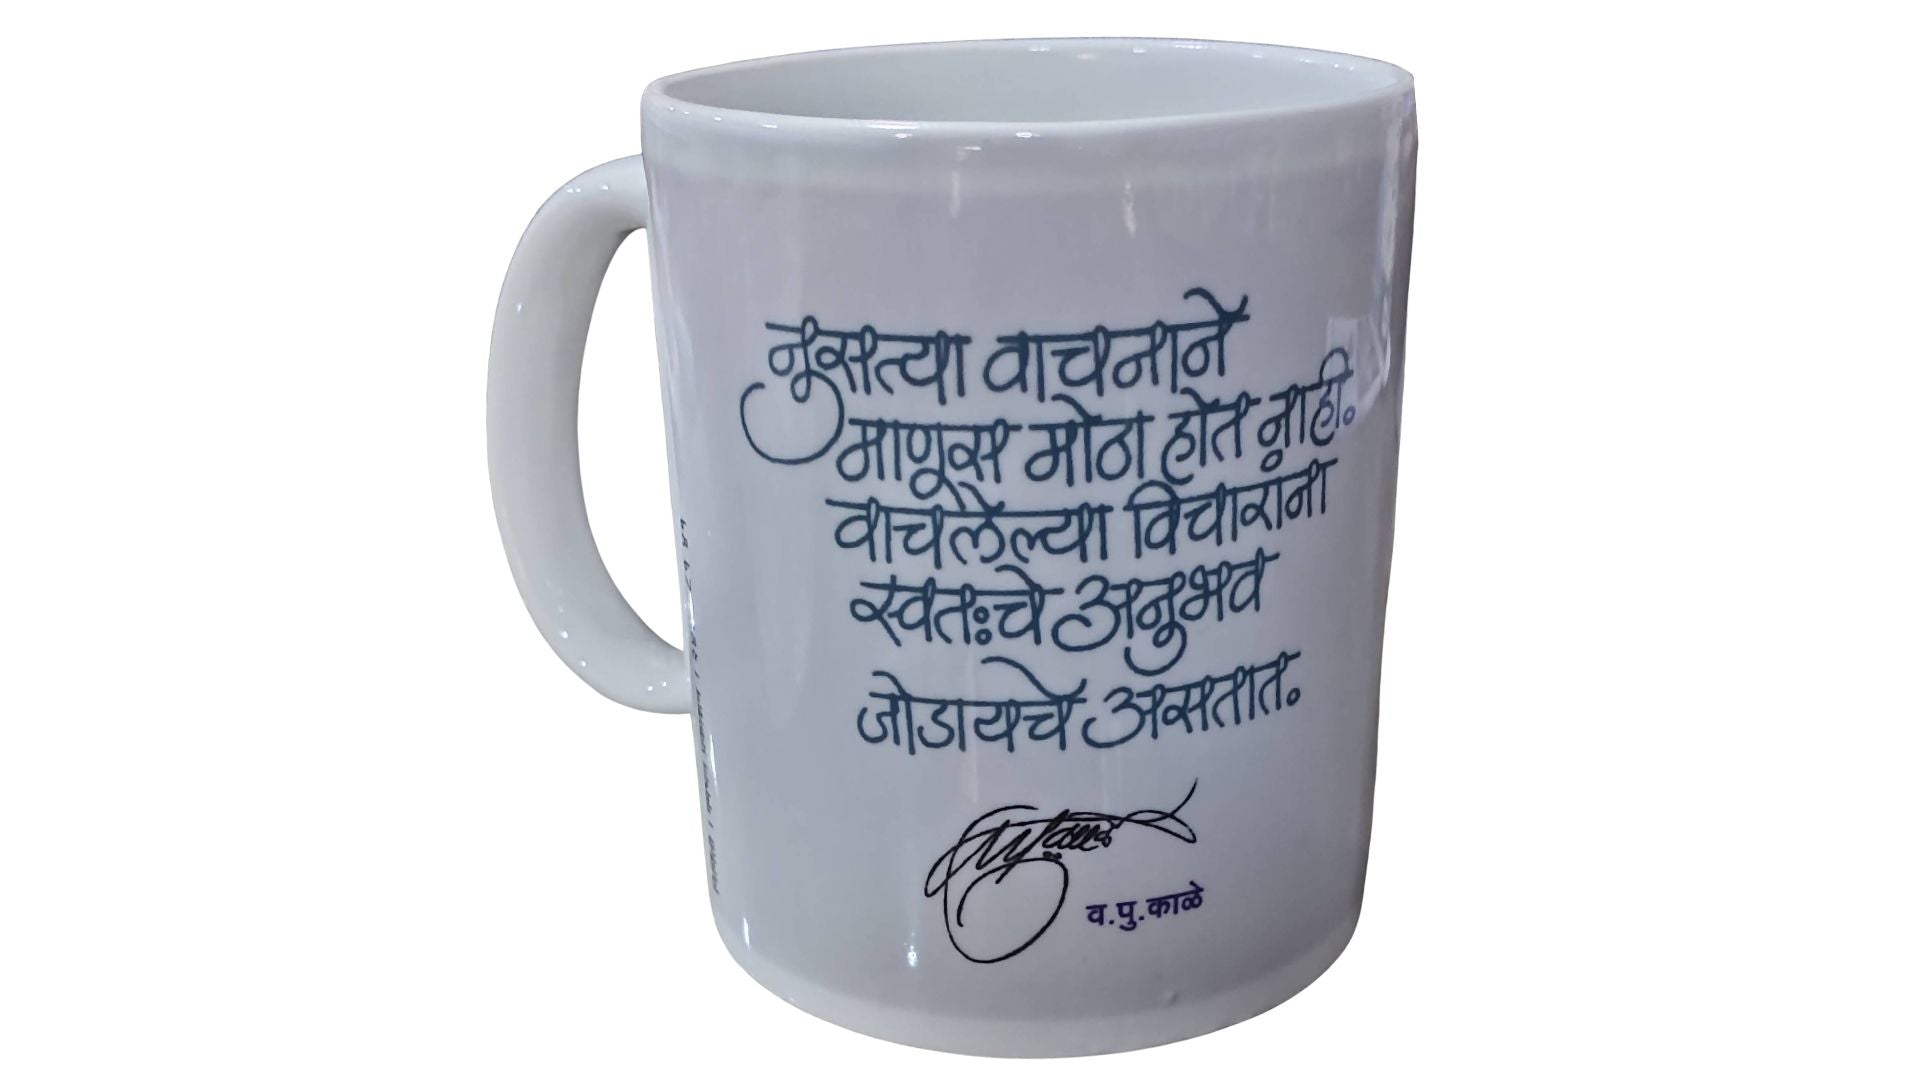 Coffee Mug V P Kale  Kaivalya Joshi Accessories inspire-bookspace.myshopify.com Half Price Books India